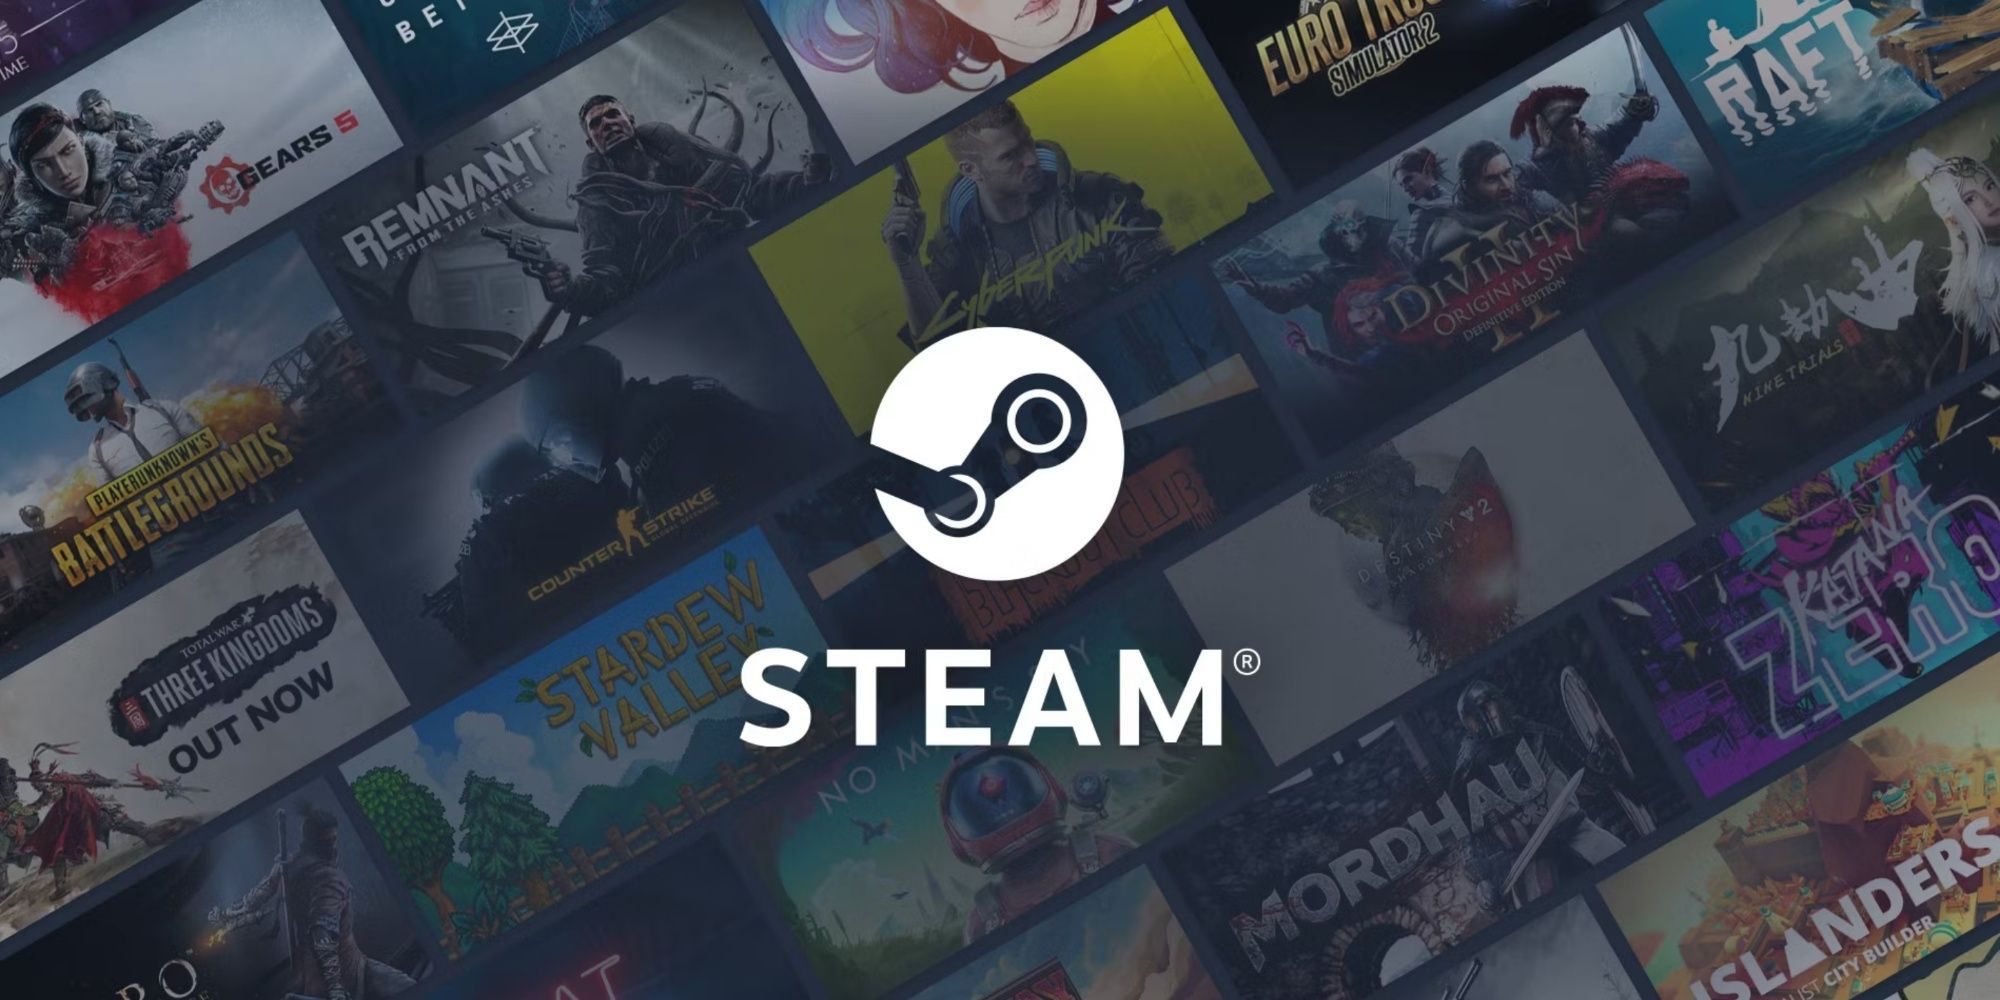 steam logo overlaid on various games